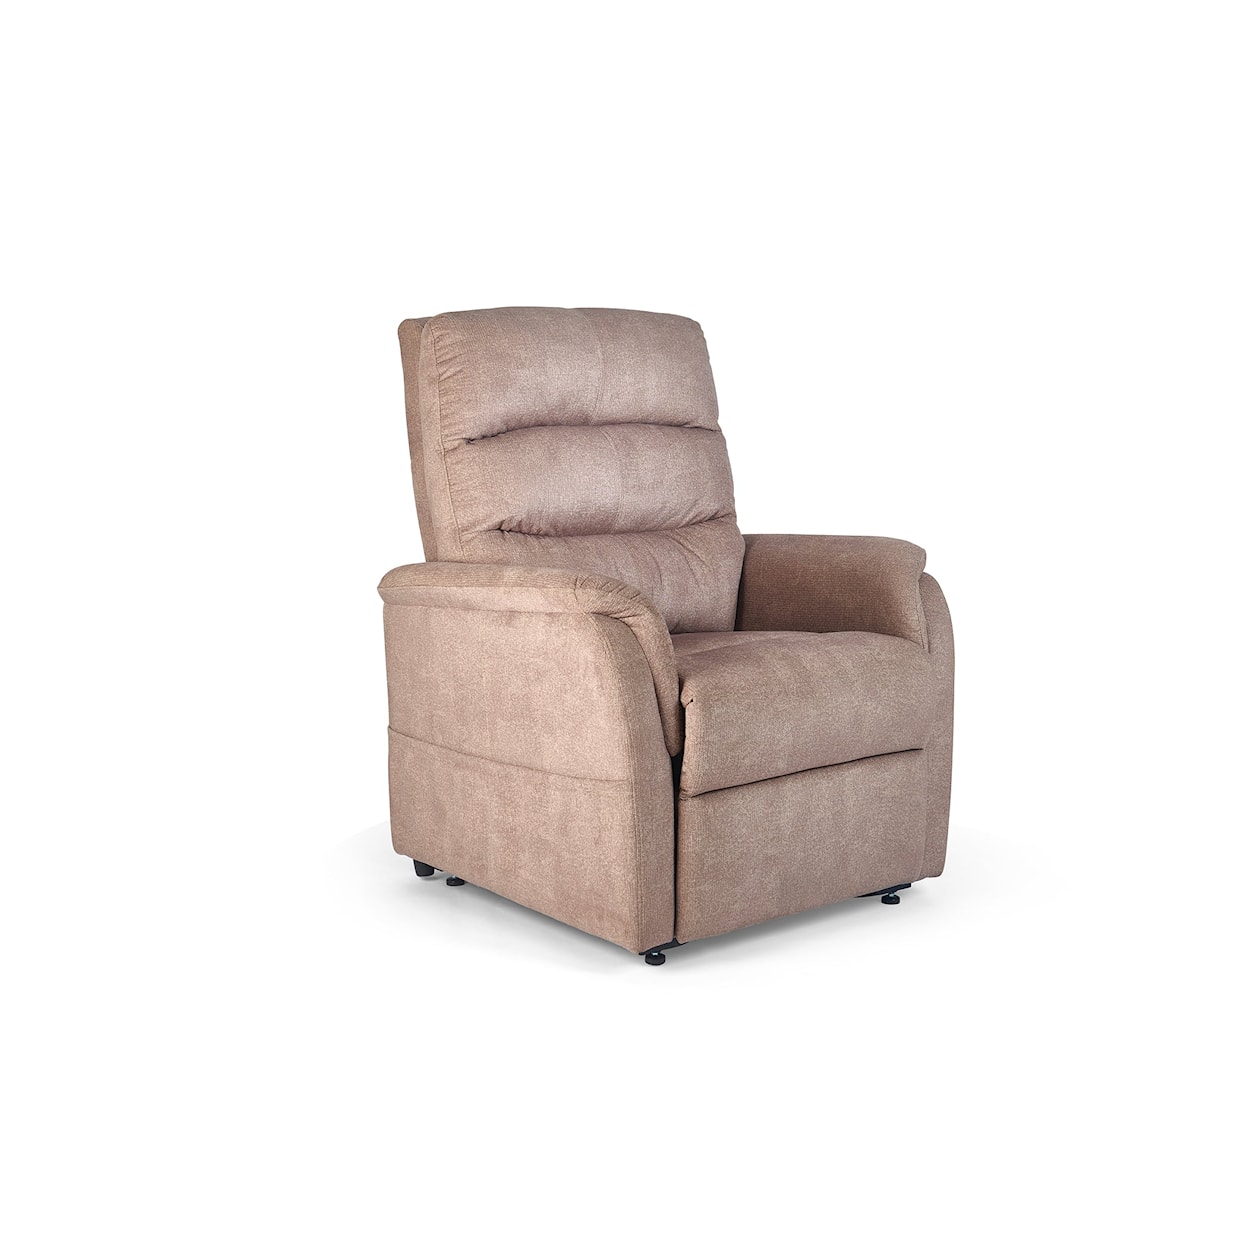 UltraComfort Destin Large Power Lift Chair Recliner